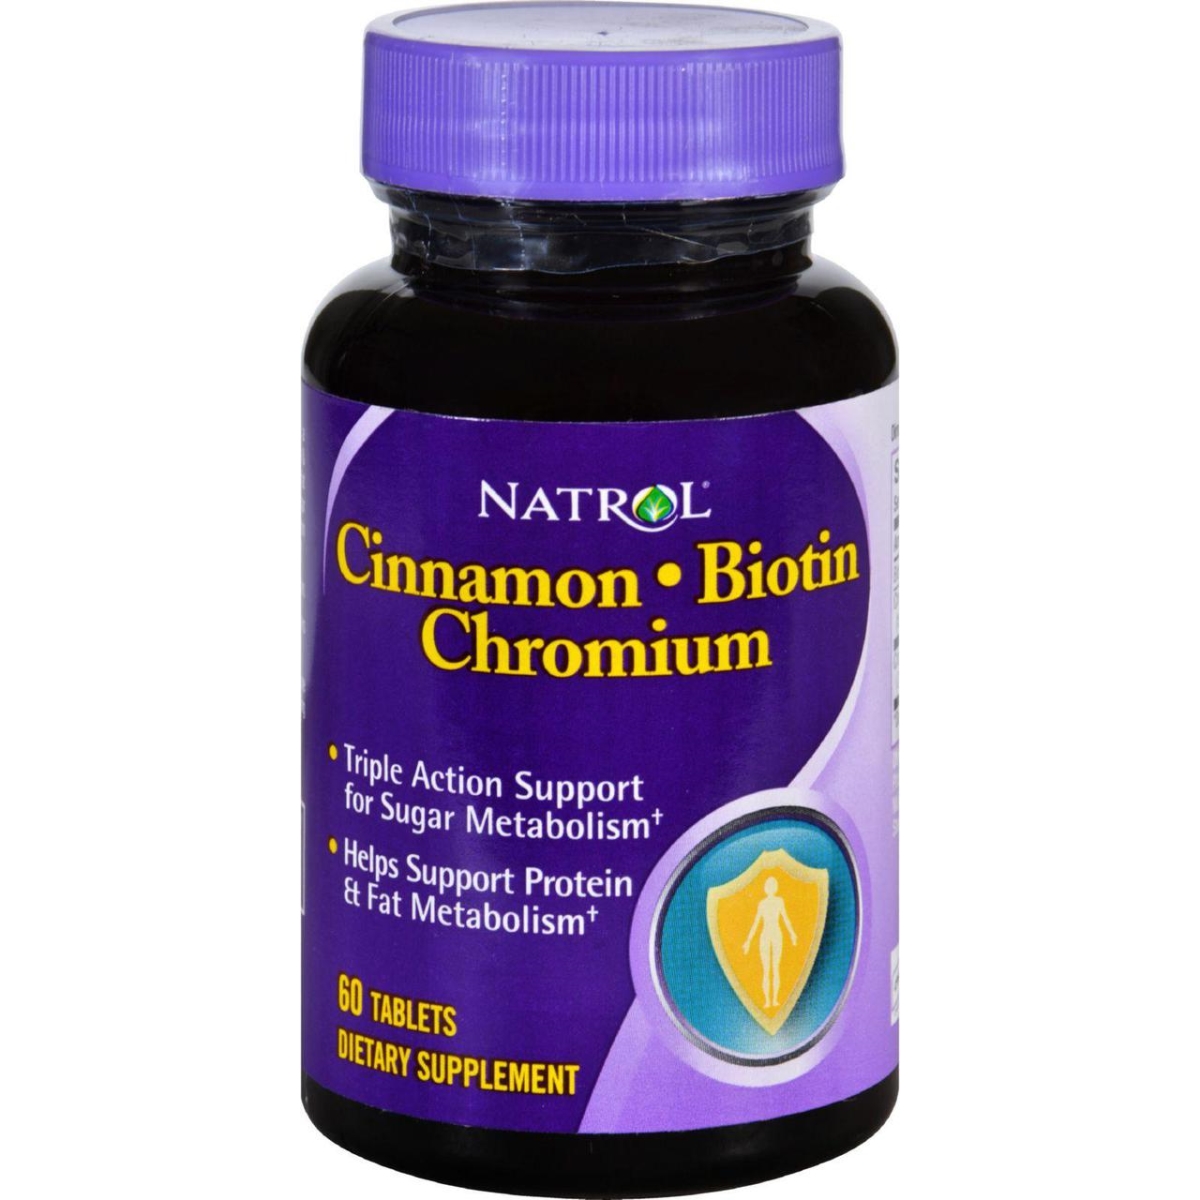 Hg0921452 Cinnamon Biotin Chromium - 60 Tablets